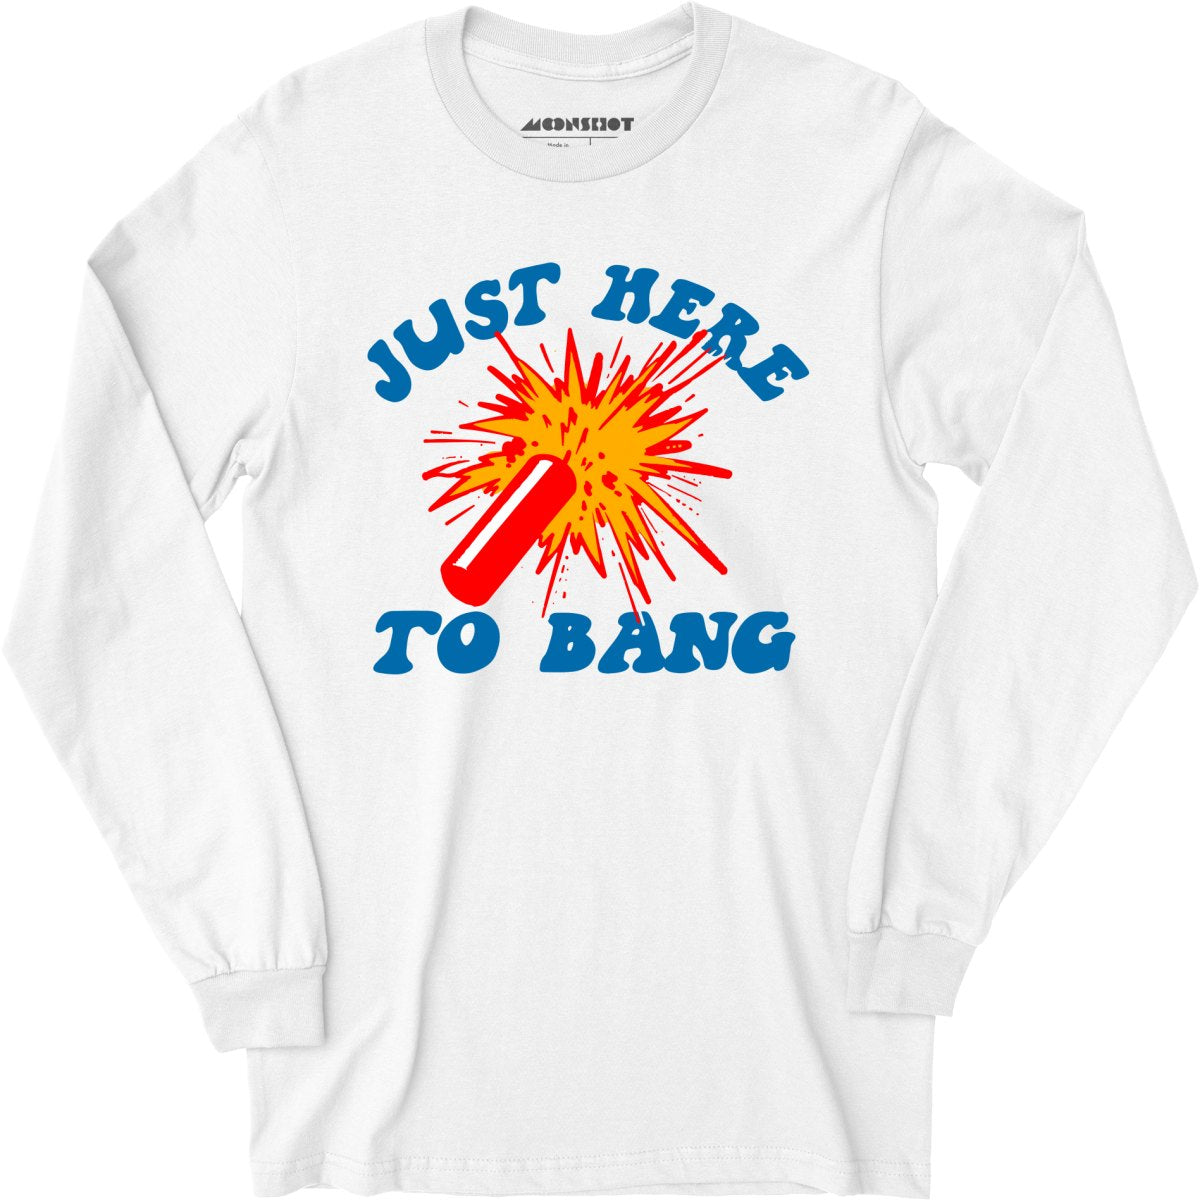 Just Here to Bang! - Long Sleeve T-Shirt